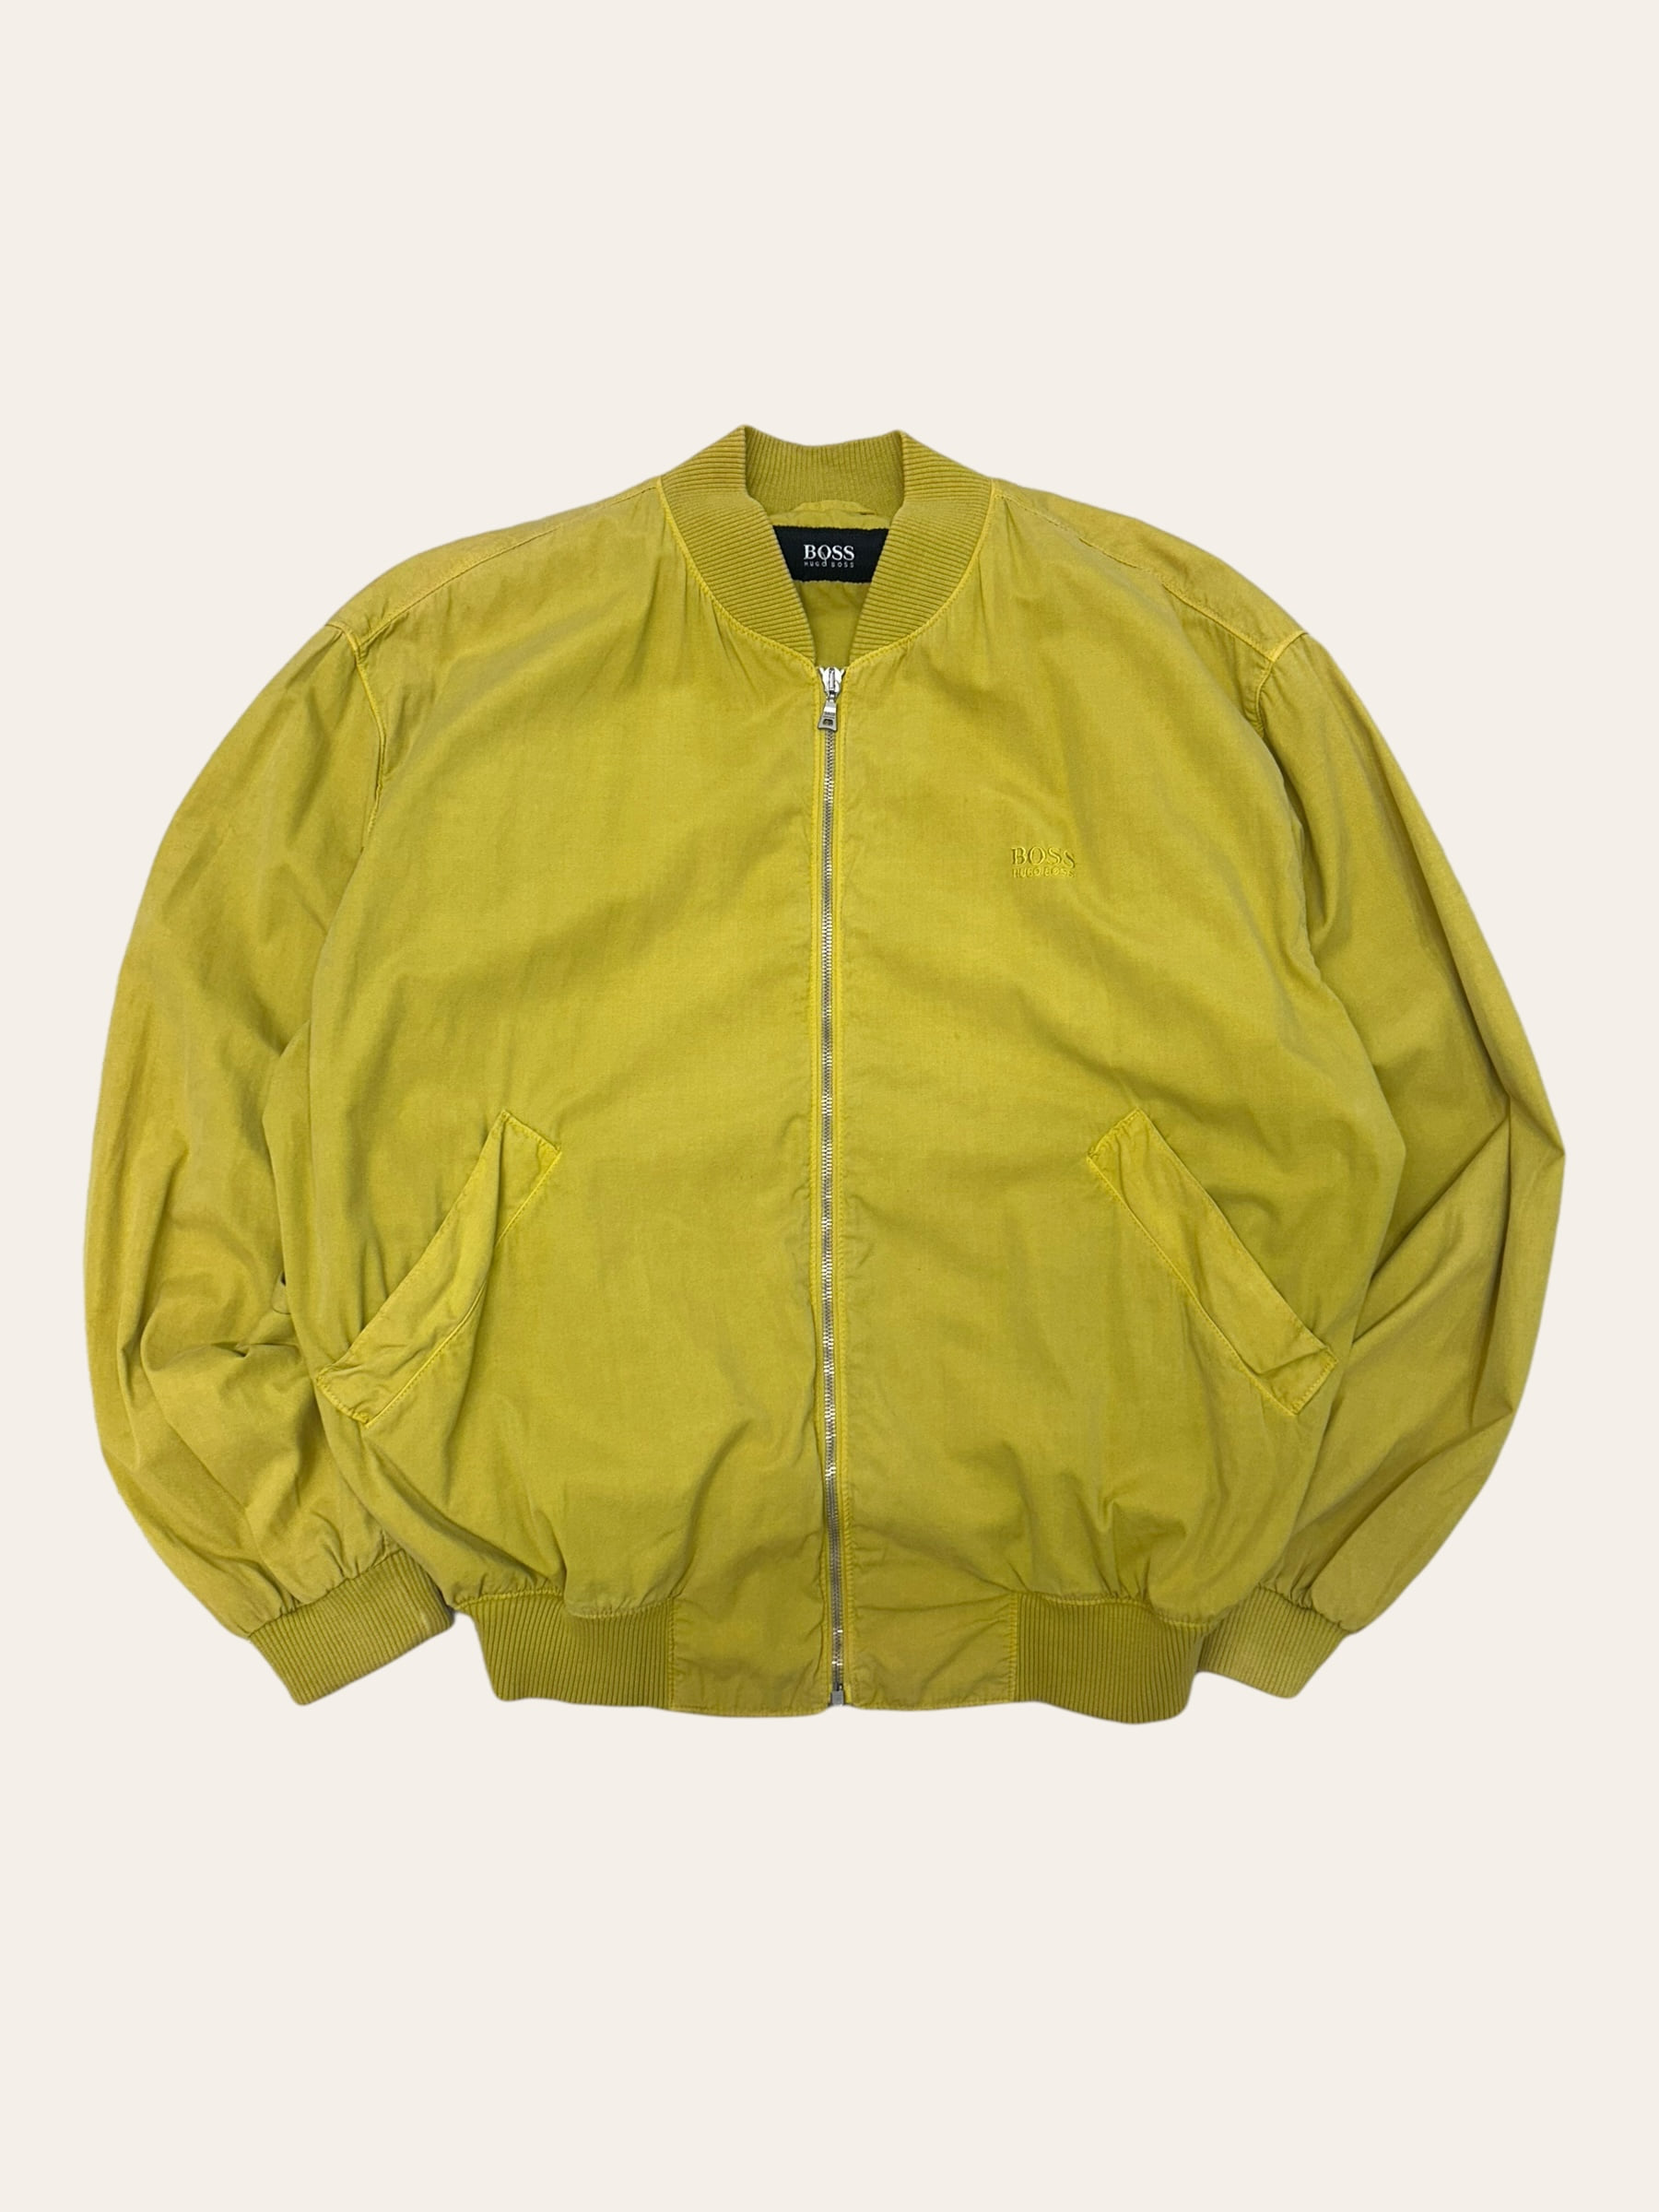 Hugo boss mustard color blouson jacket 52